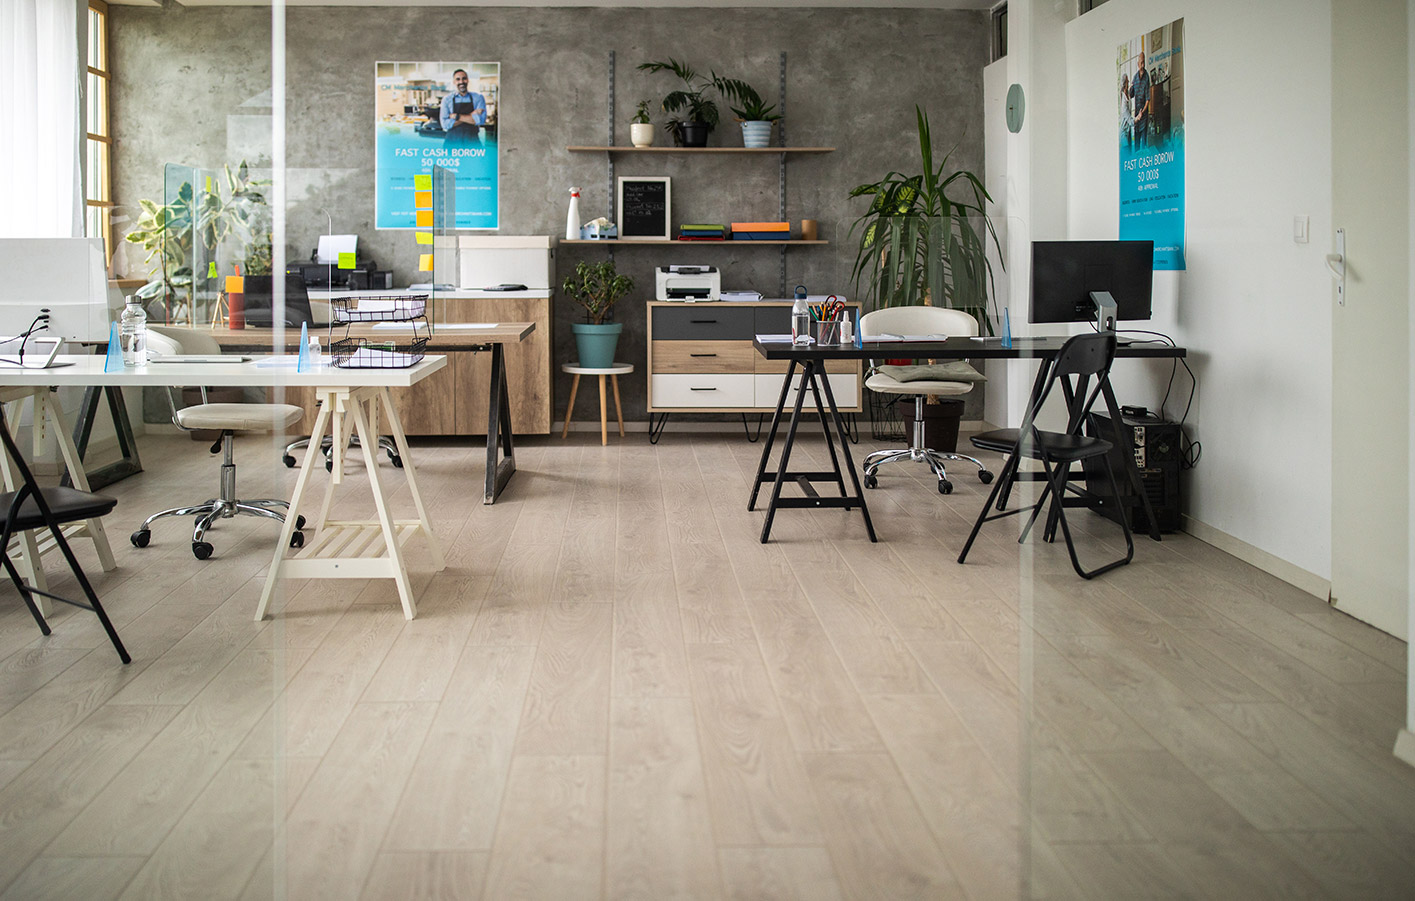 Büro mit Vinylboden in Holzoptik